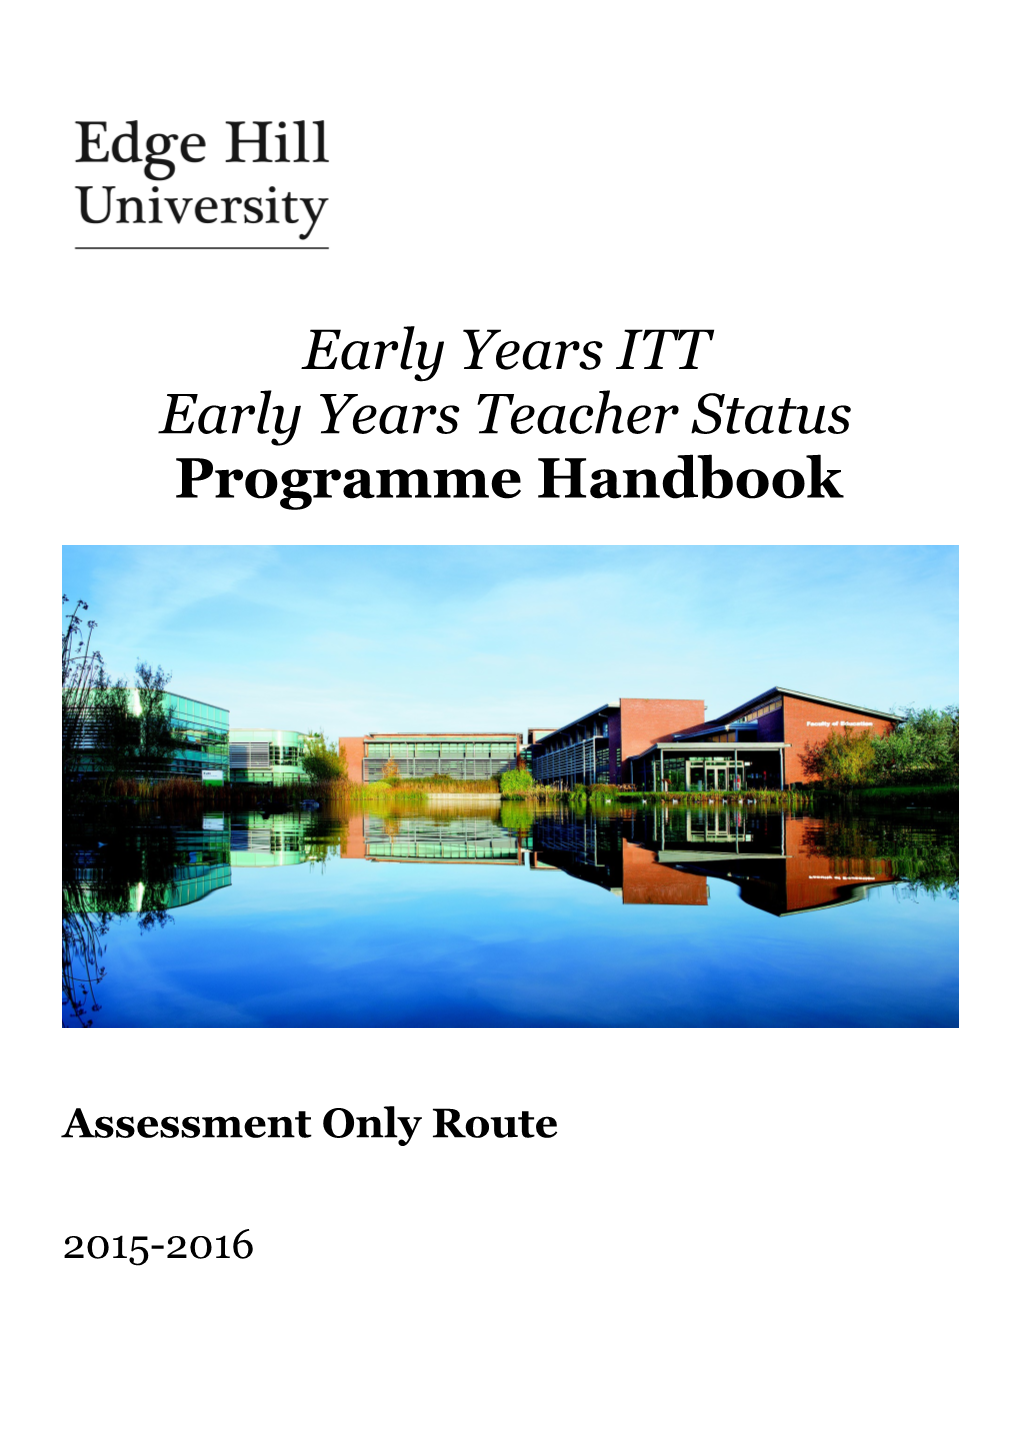 Early Years Teacher Status Programme Handbook